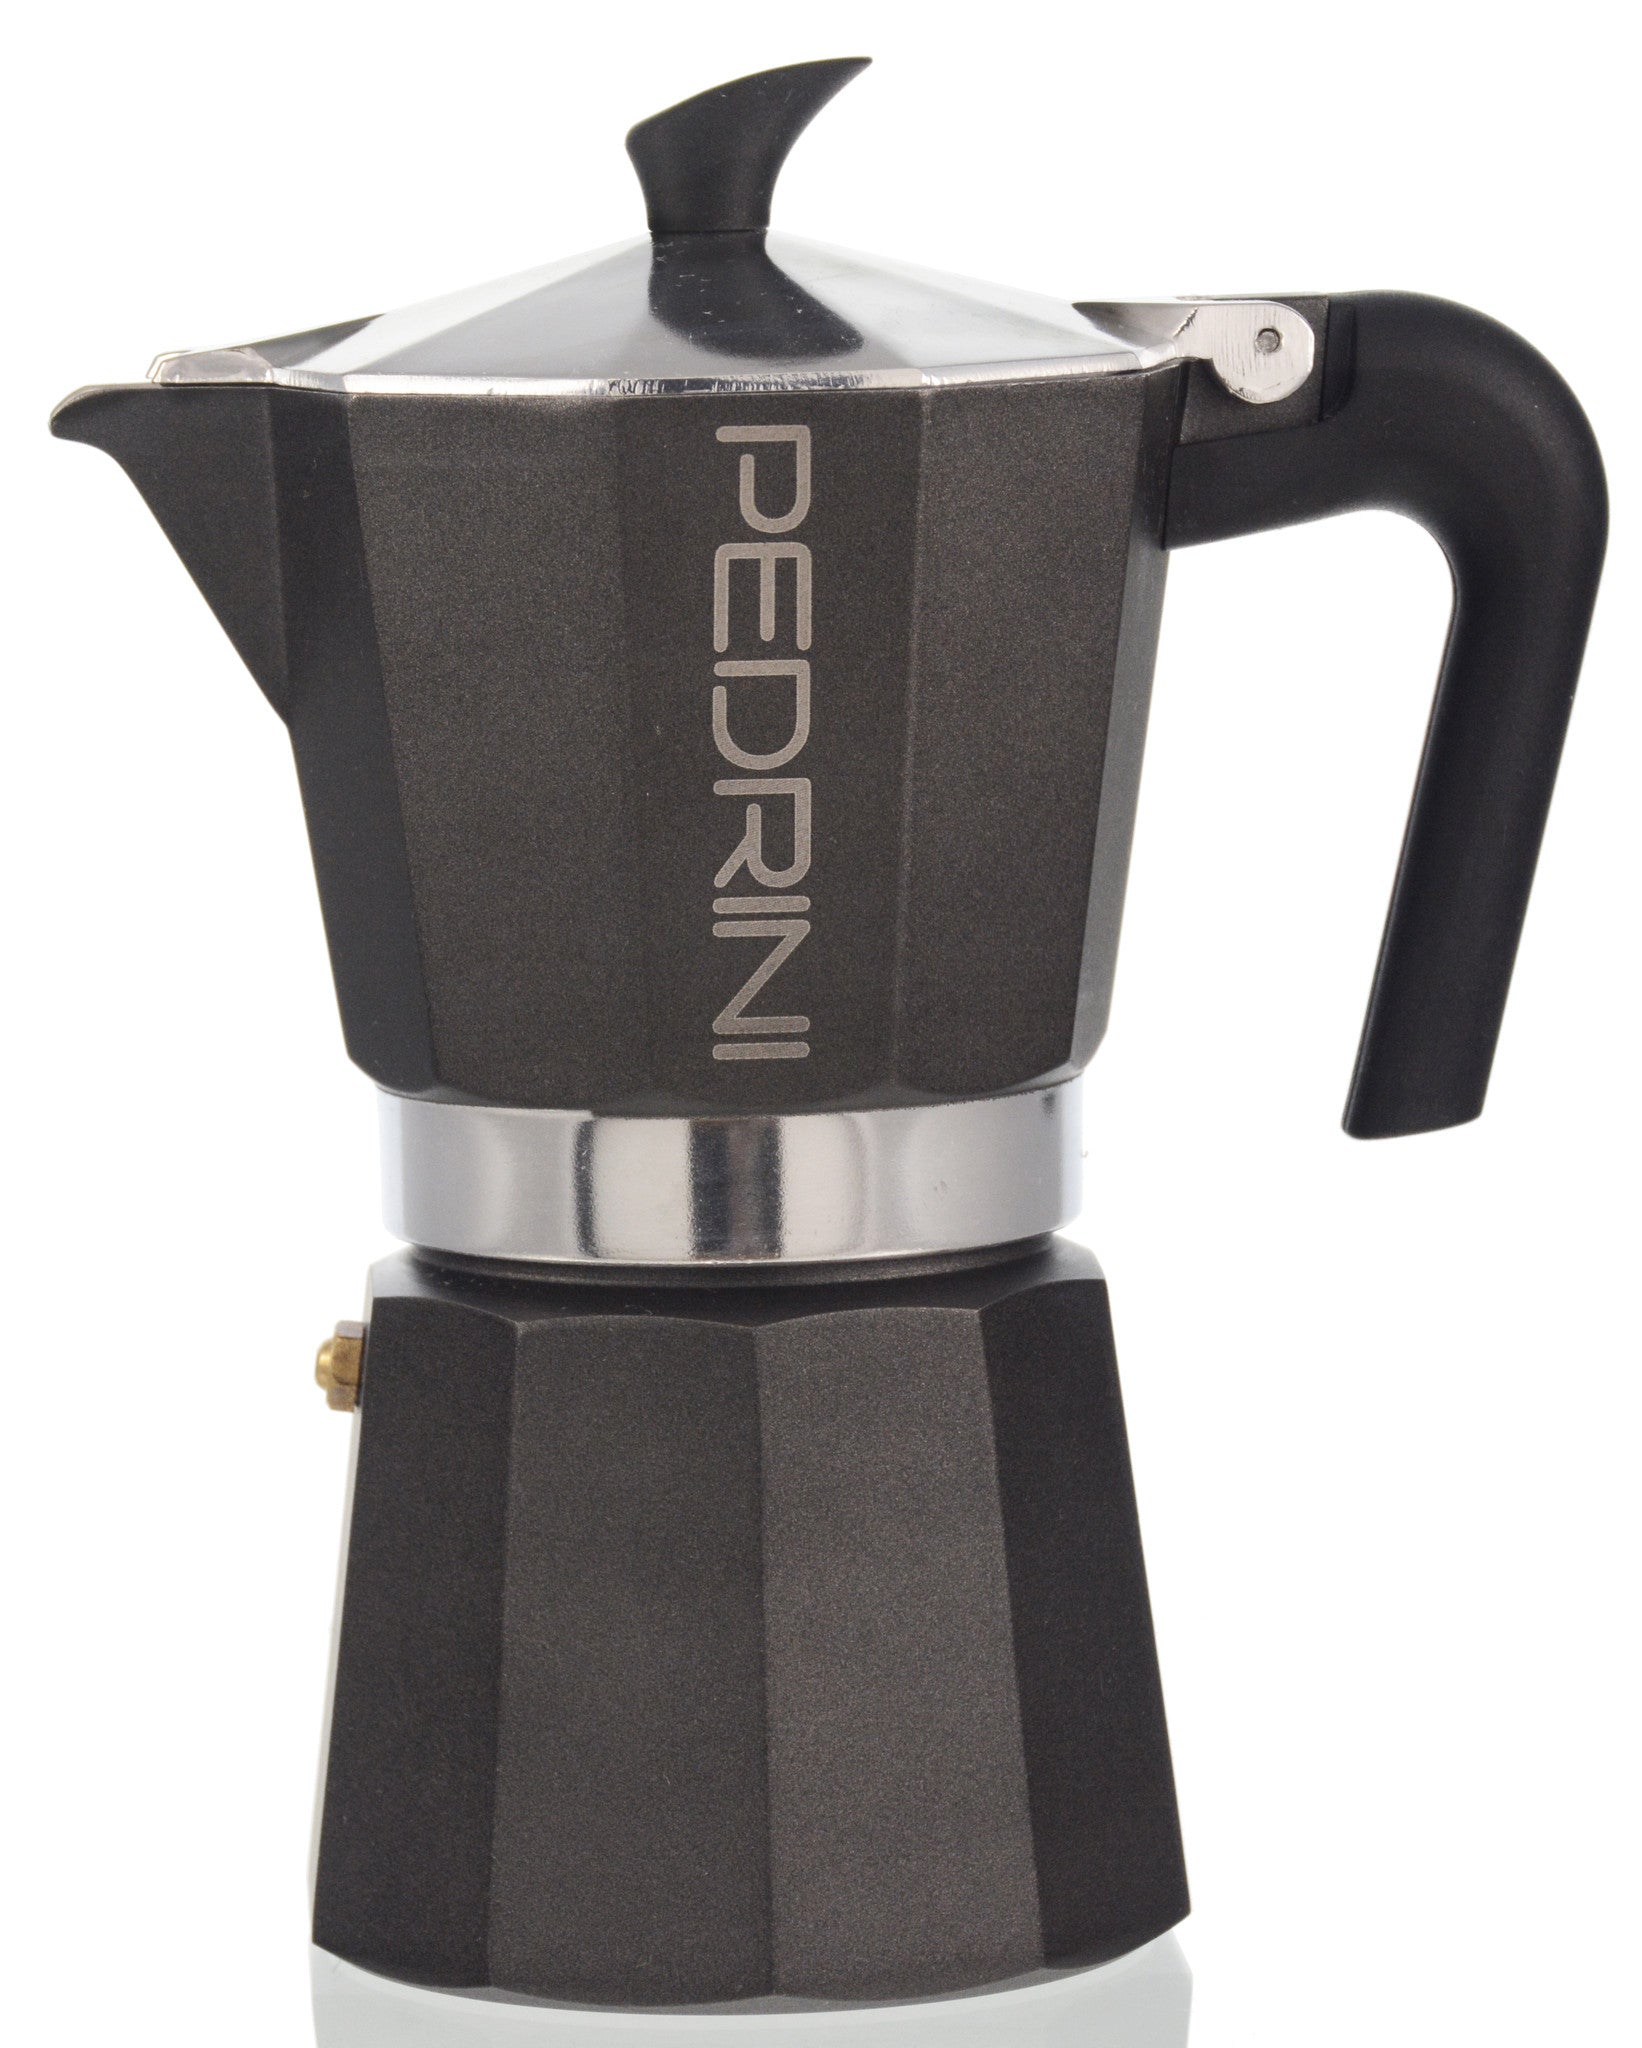 PEDRINI COFFEE MAKER 2 CUPS - Qasitli